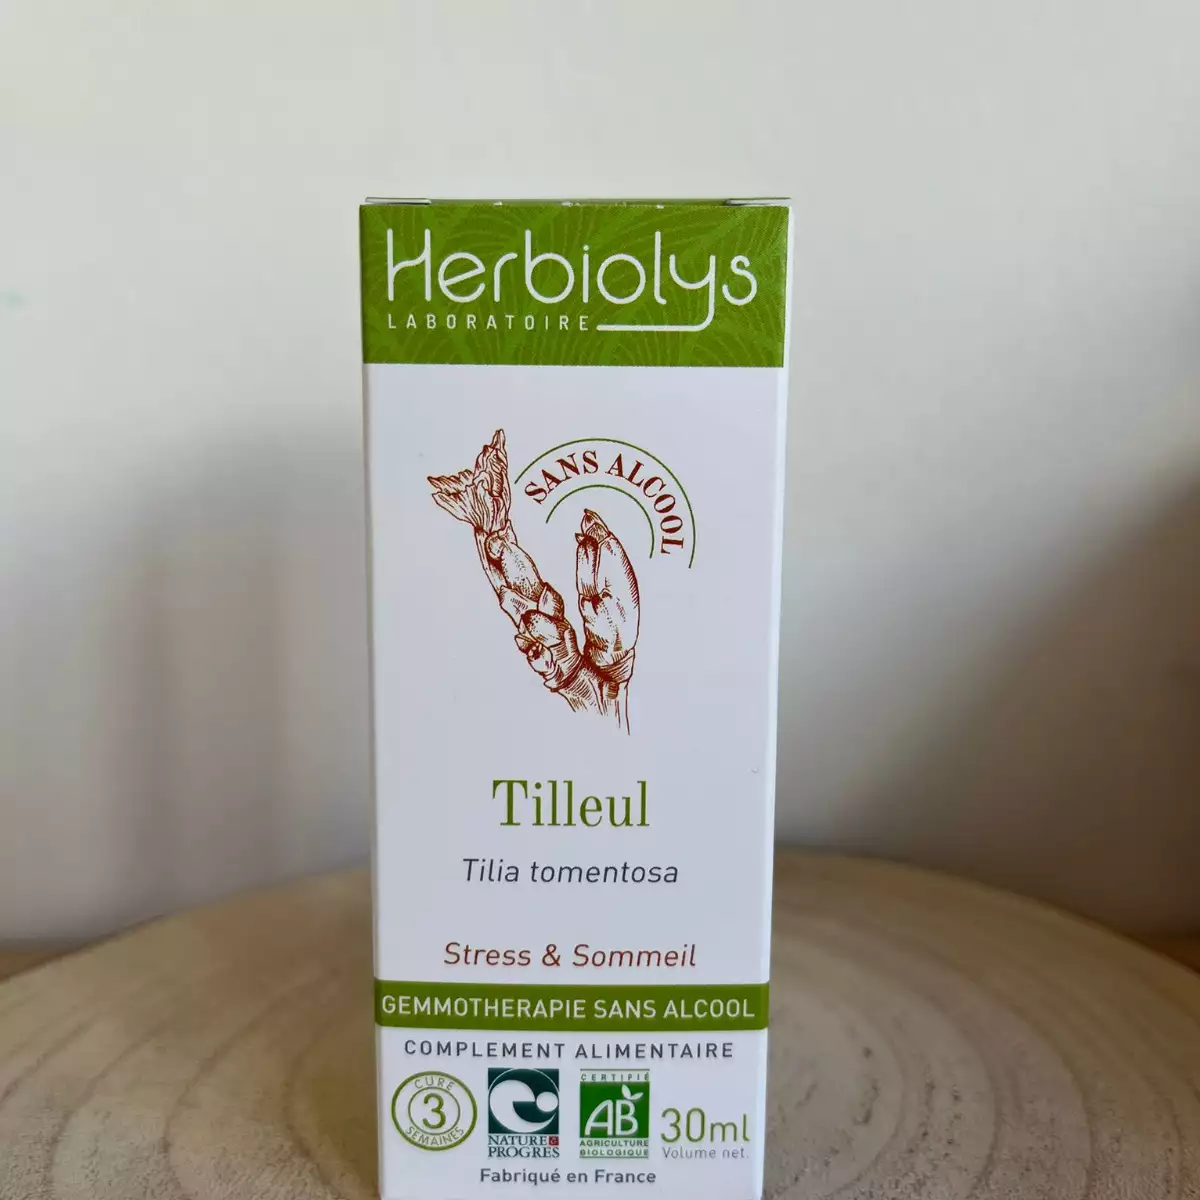 Tilleul - Herbiolys